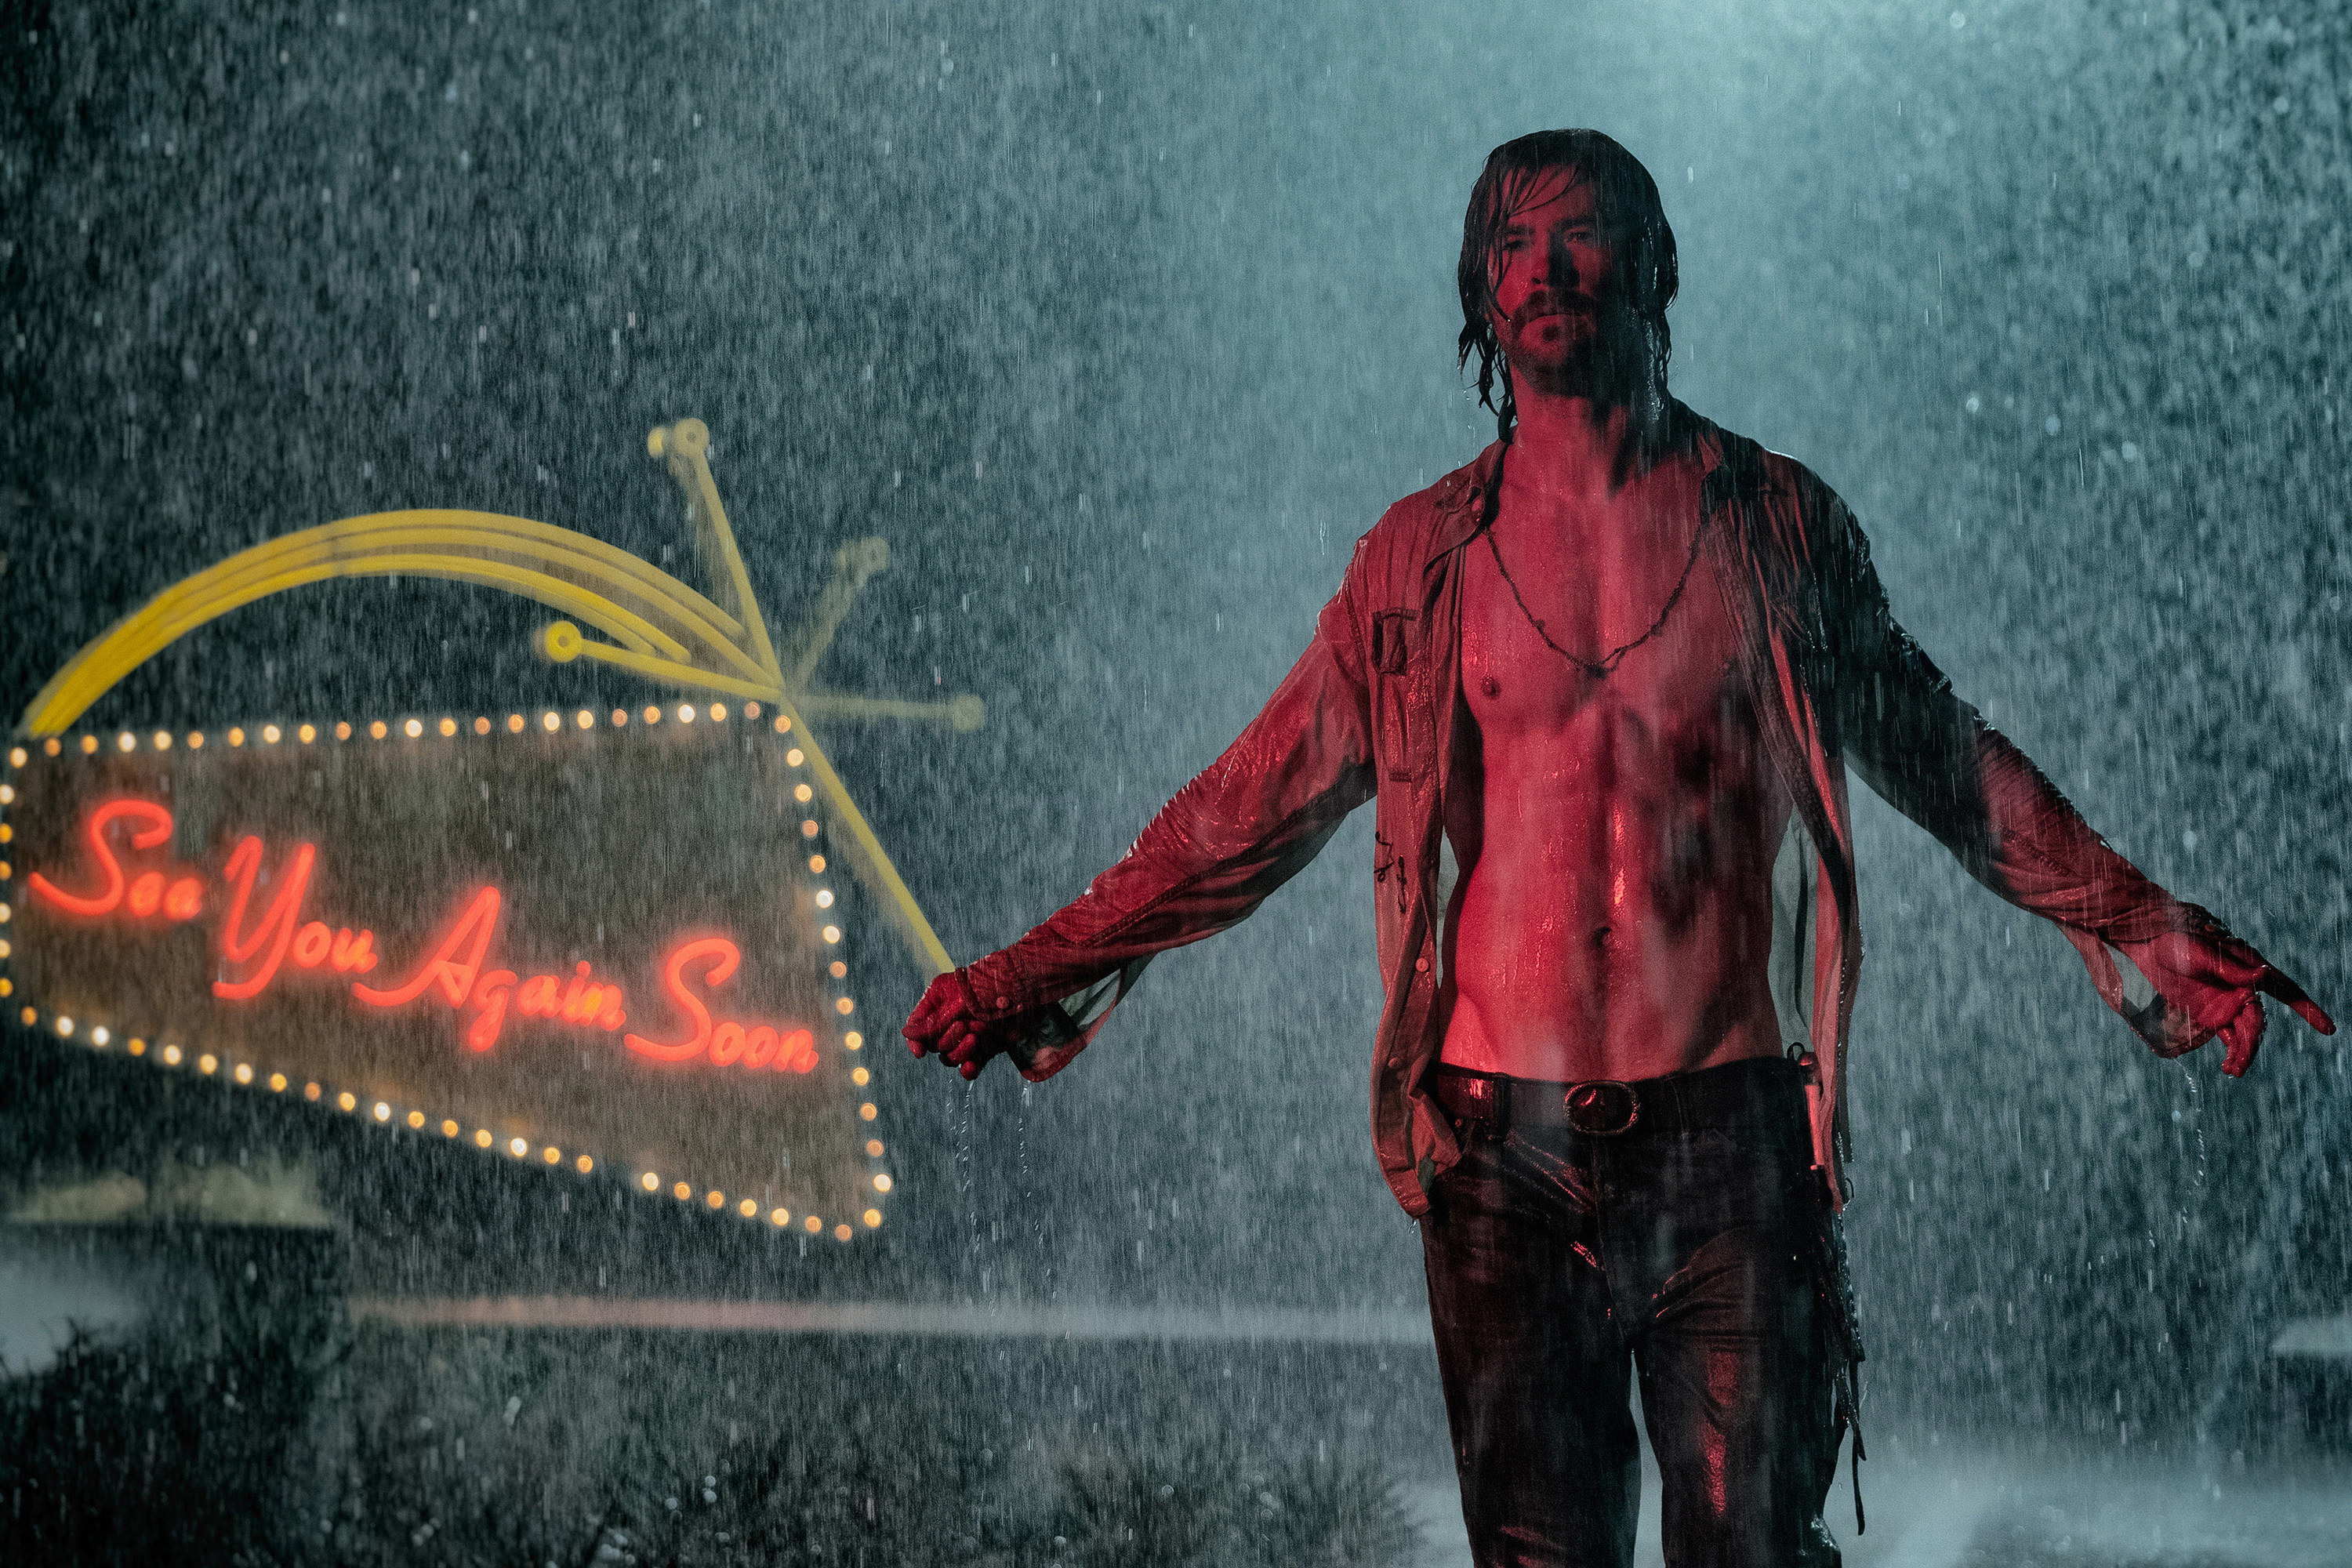 Chris Hemsworth, shirtless, in the rain